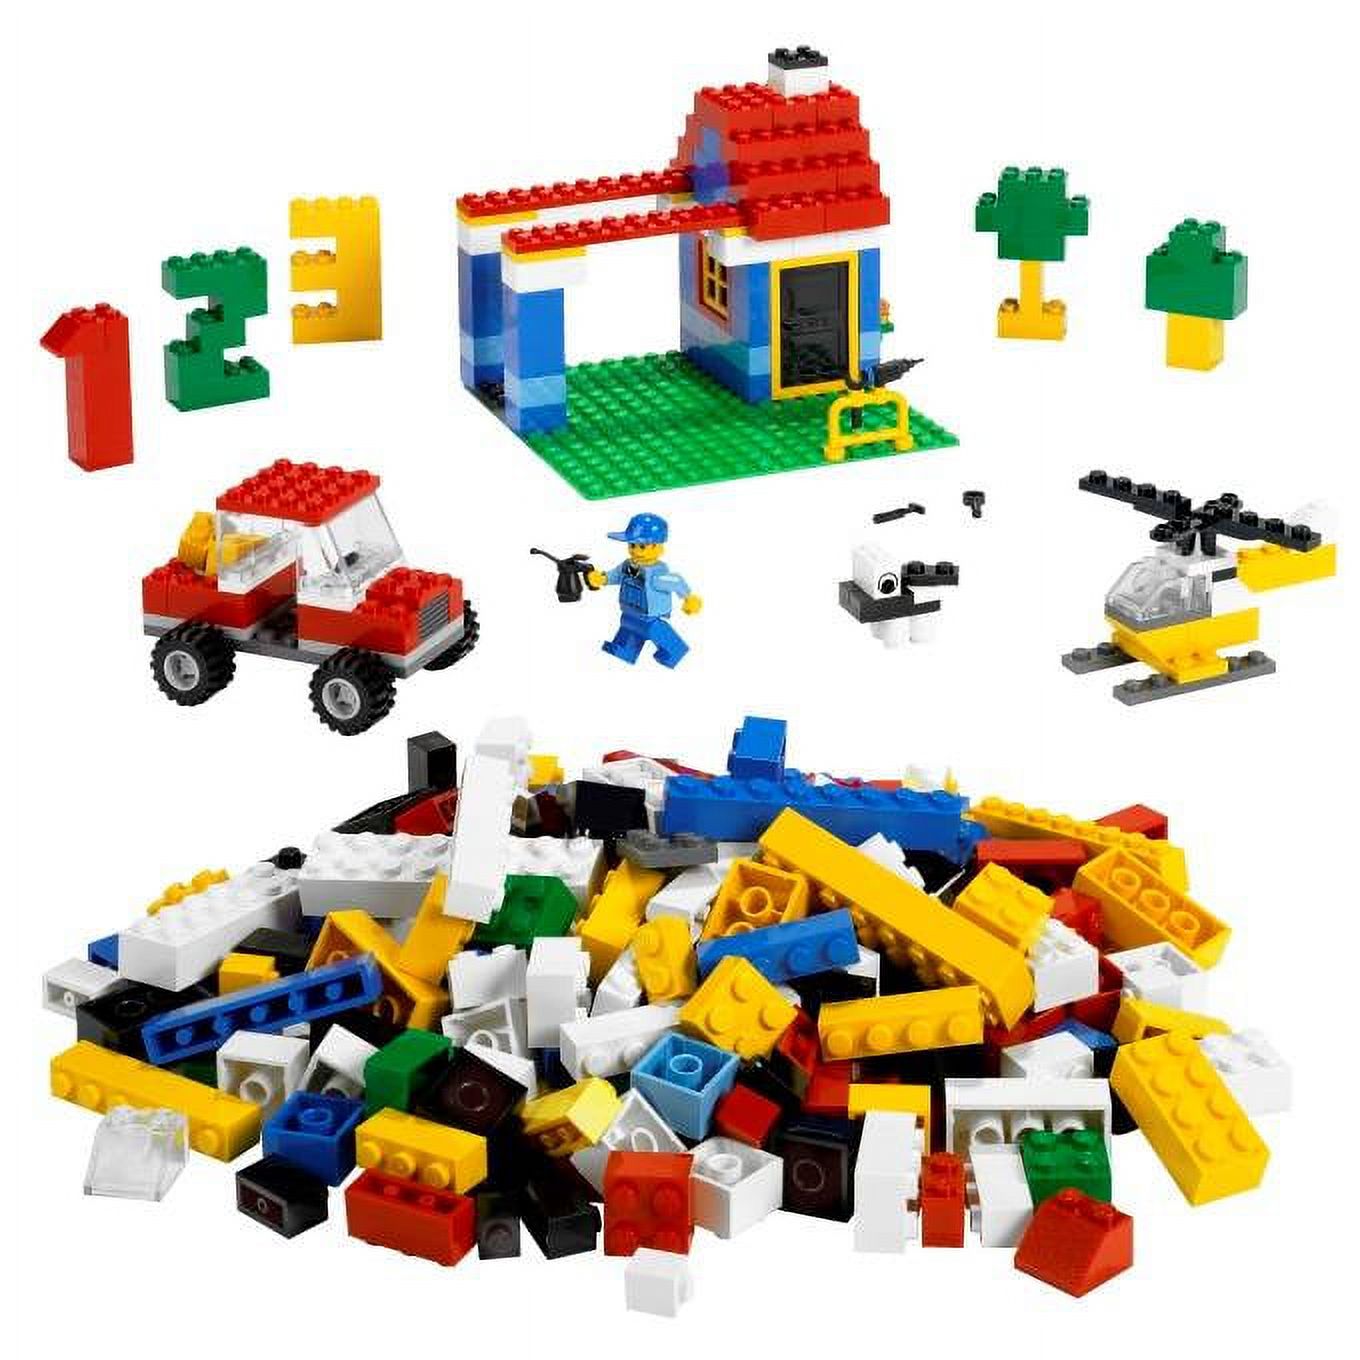 Lego Building Set - image 2 of 2